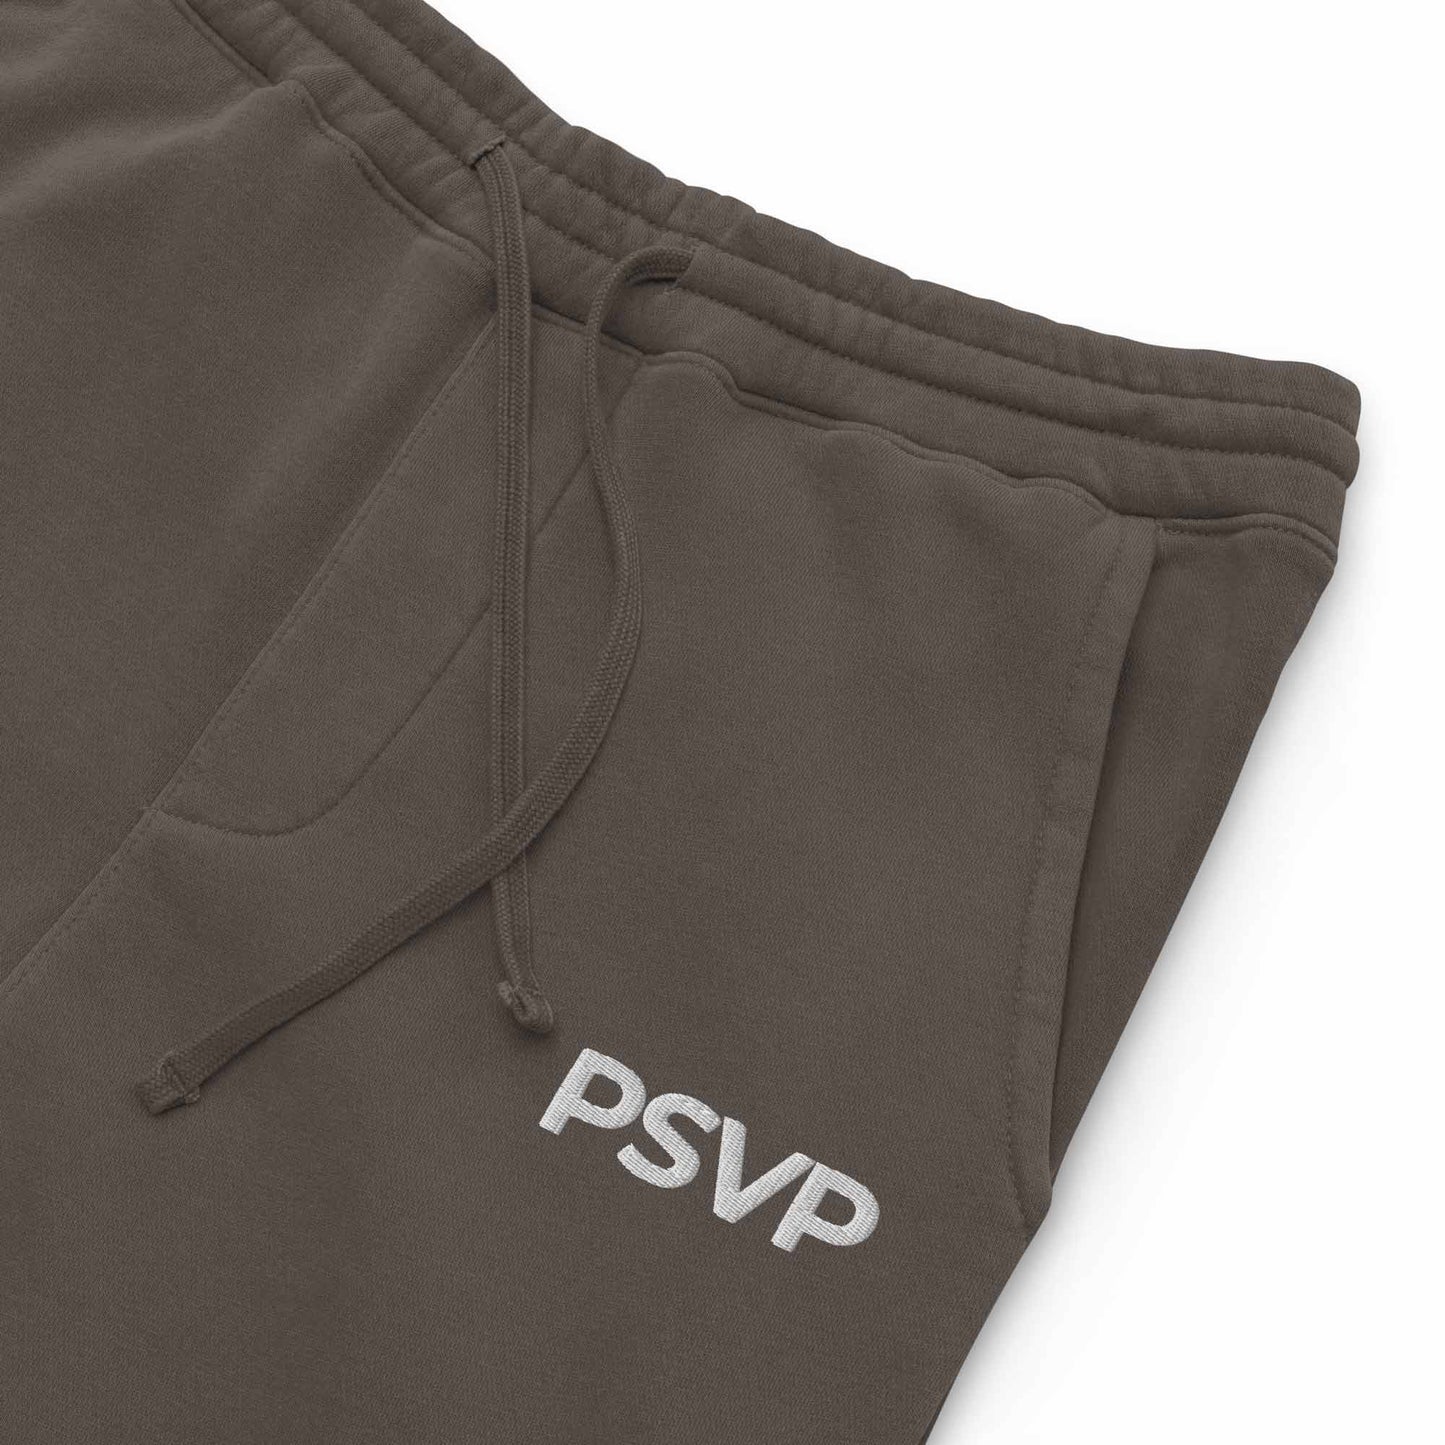 PSVP Pigment-Dyed Black Sweatpants - Embroidery | Sweatpants | PARADIS SVP